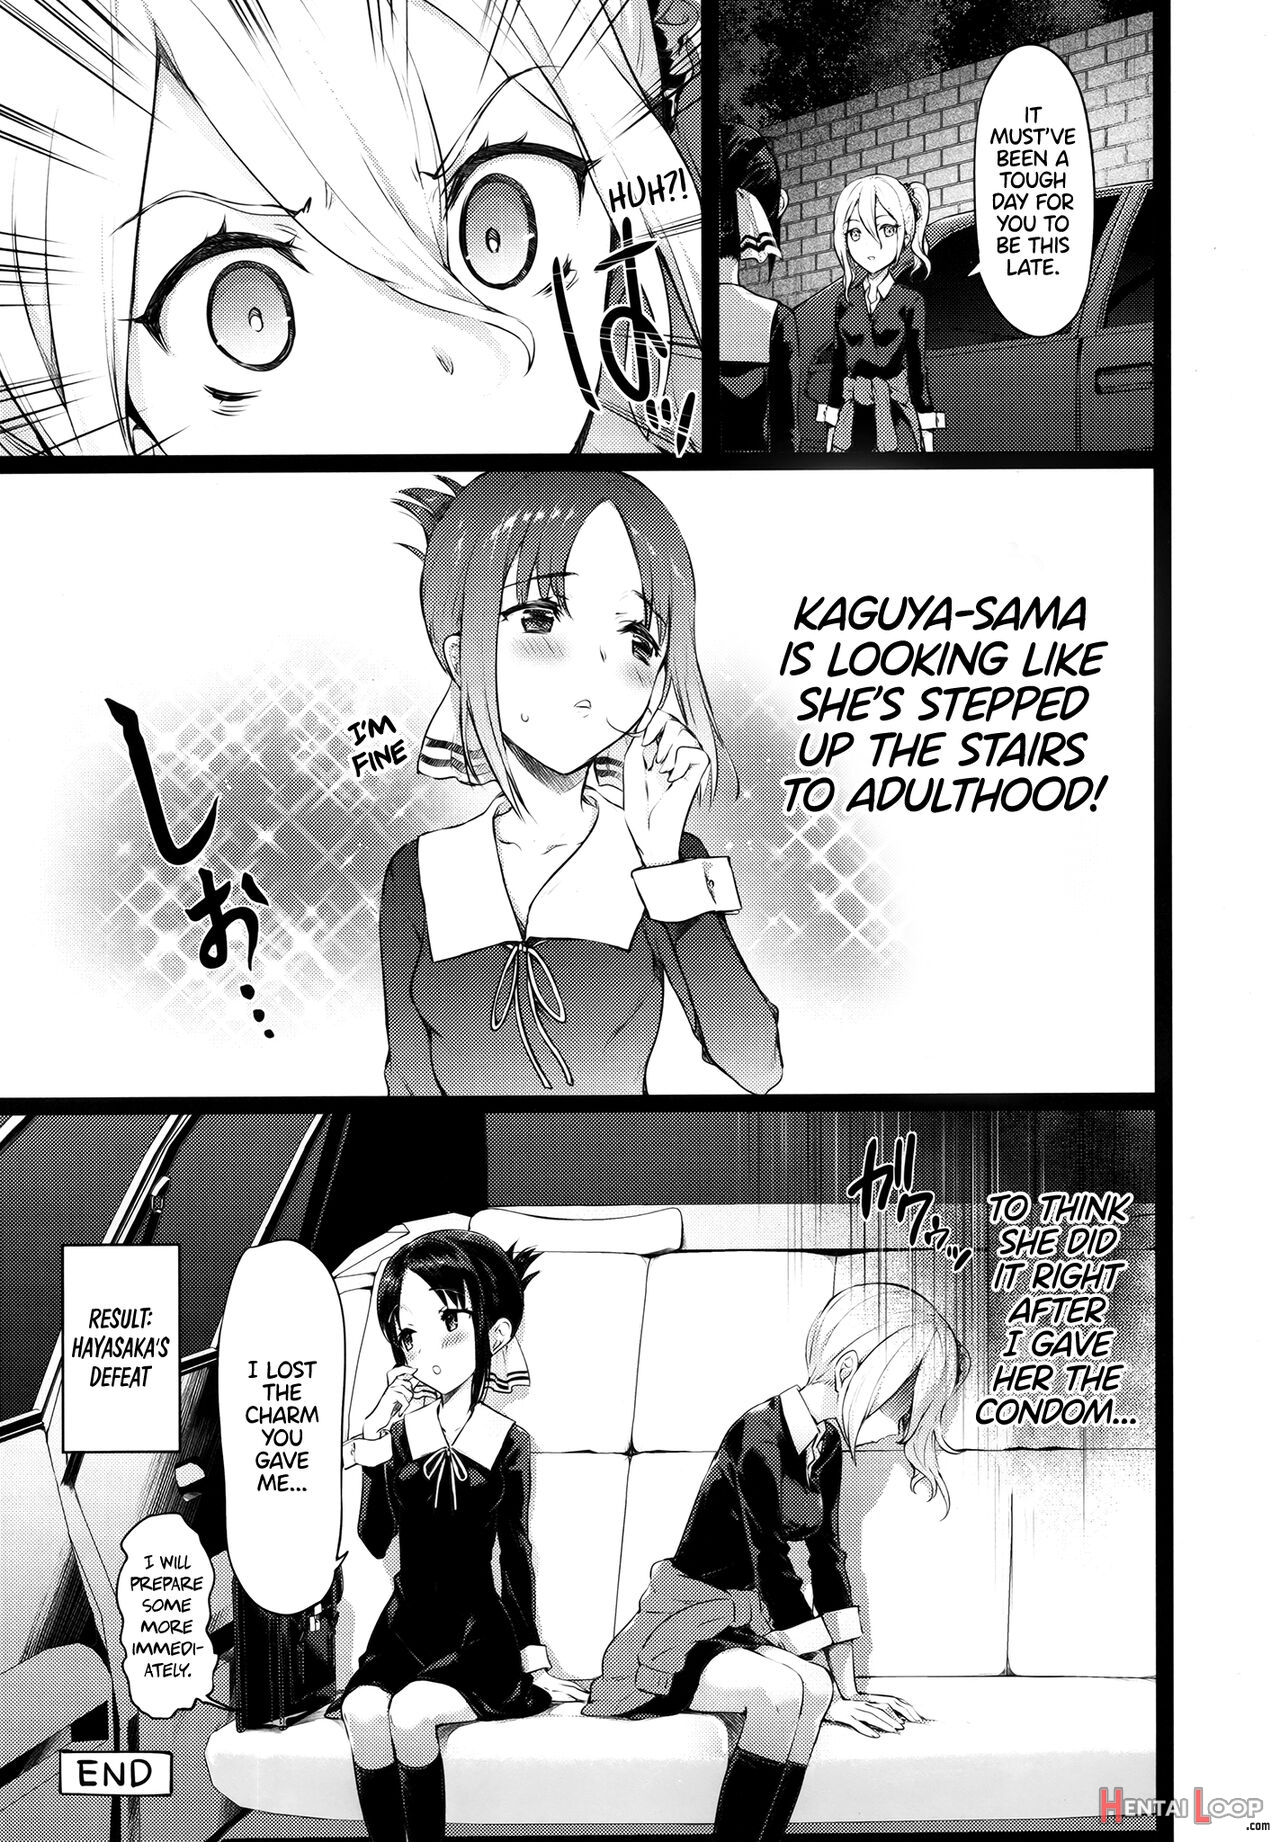 Kaguya-sama’s Matchmaking Charm page 24